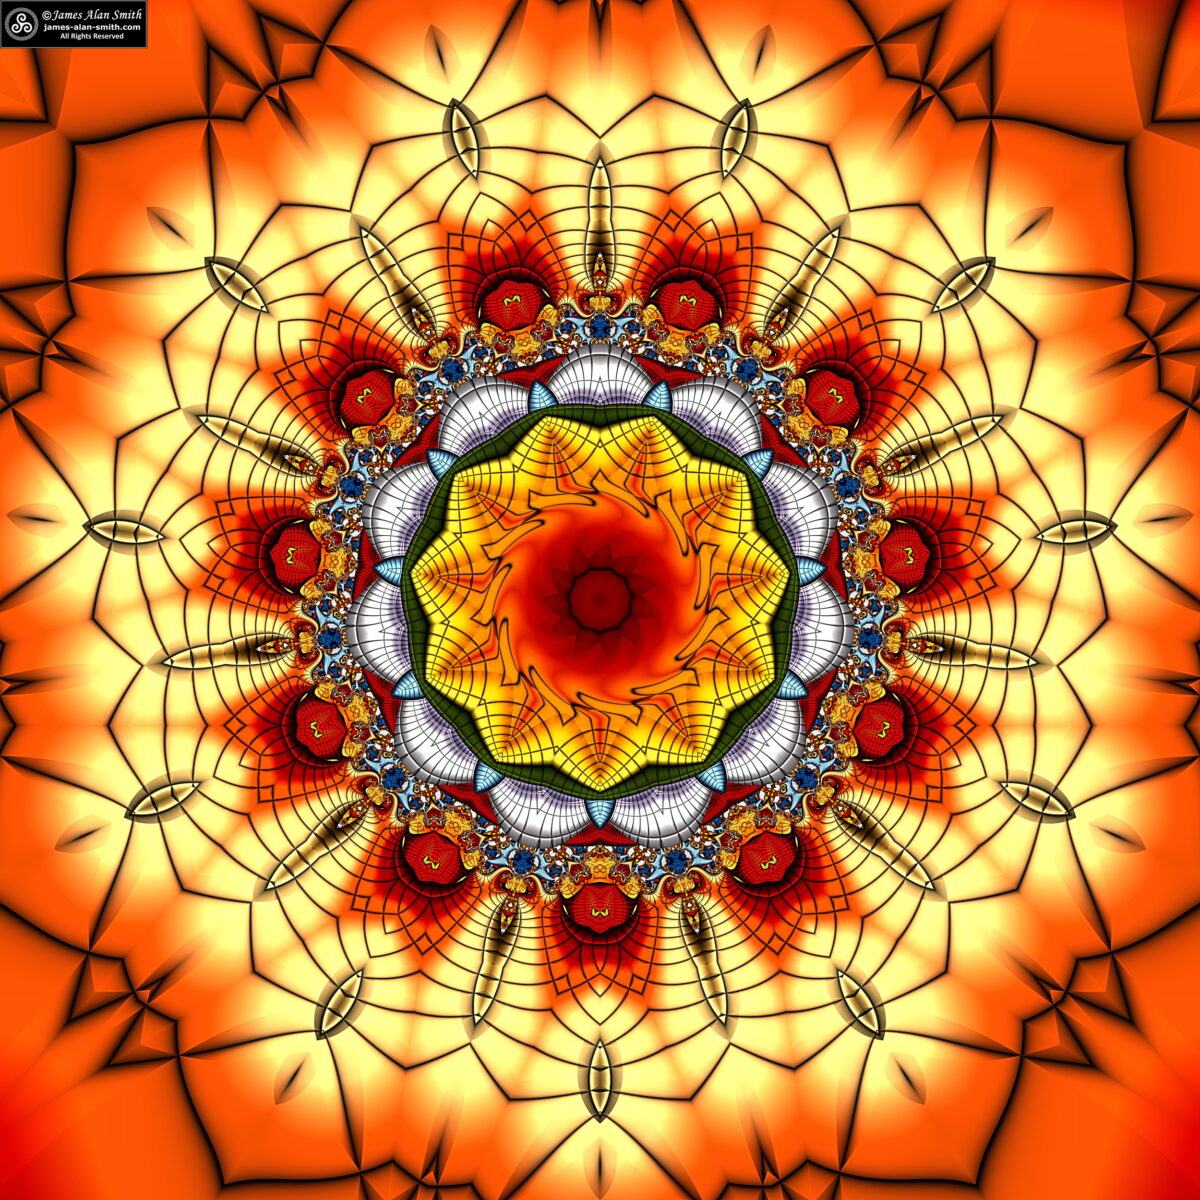 Lines of Illumination Mandala: Artwork by James Alan Smith